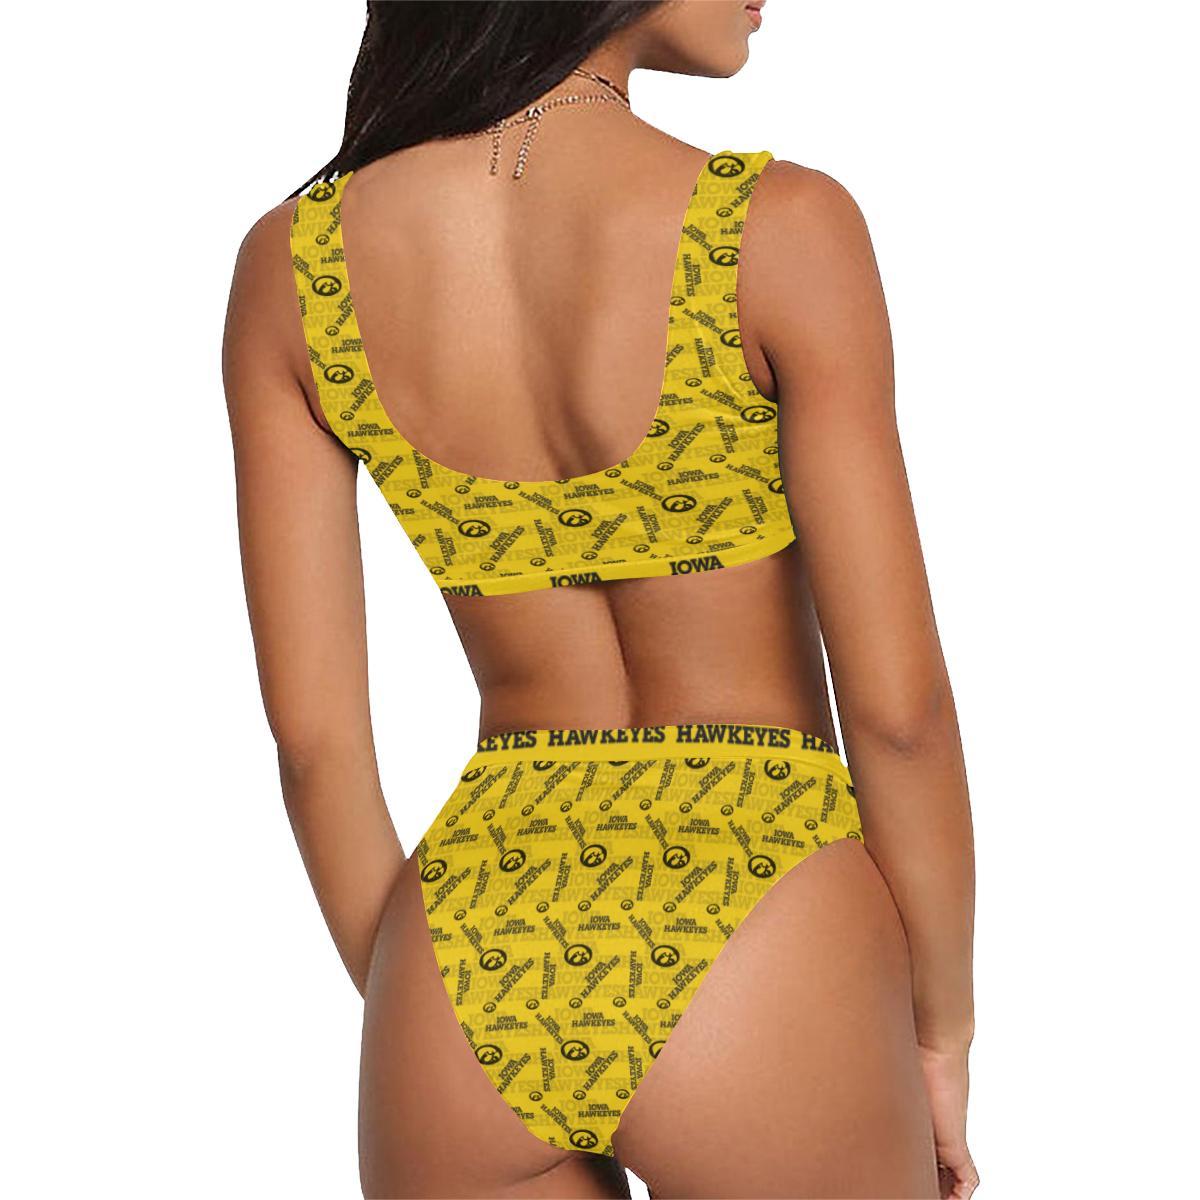 Iowa Hawkeyes Sport Top & High-Waisted Bikini Swimsuit